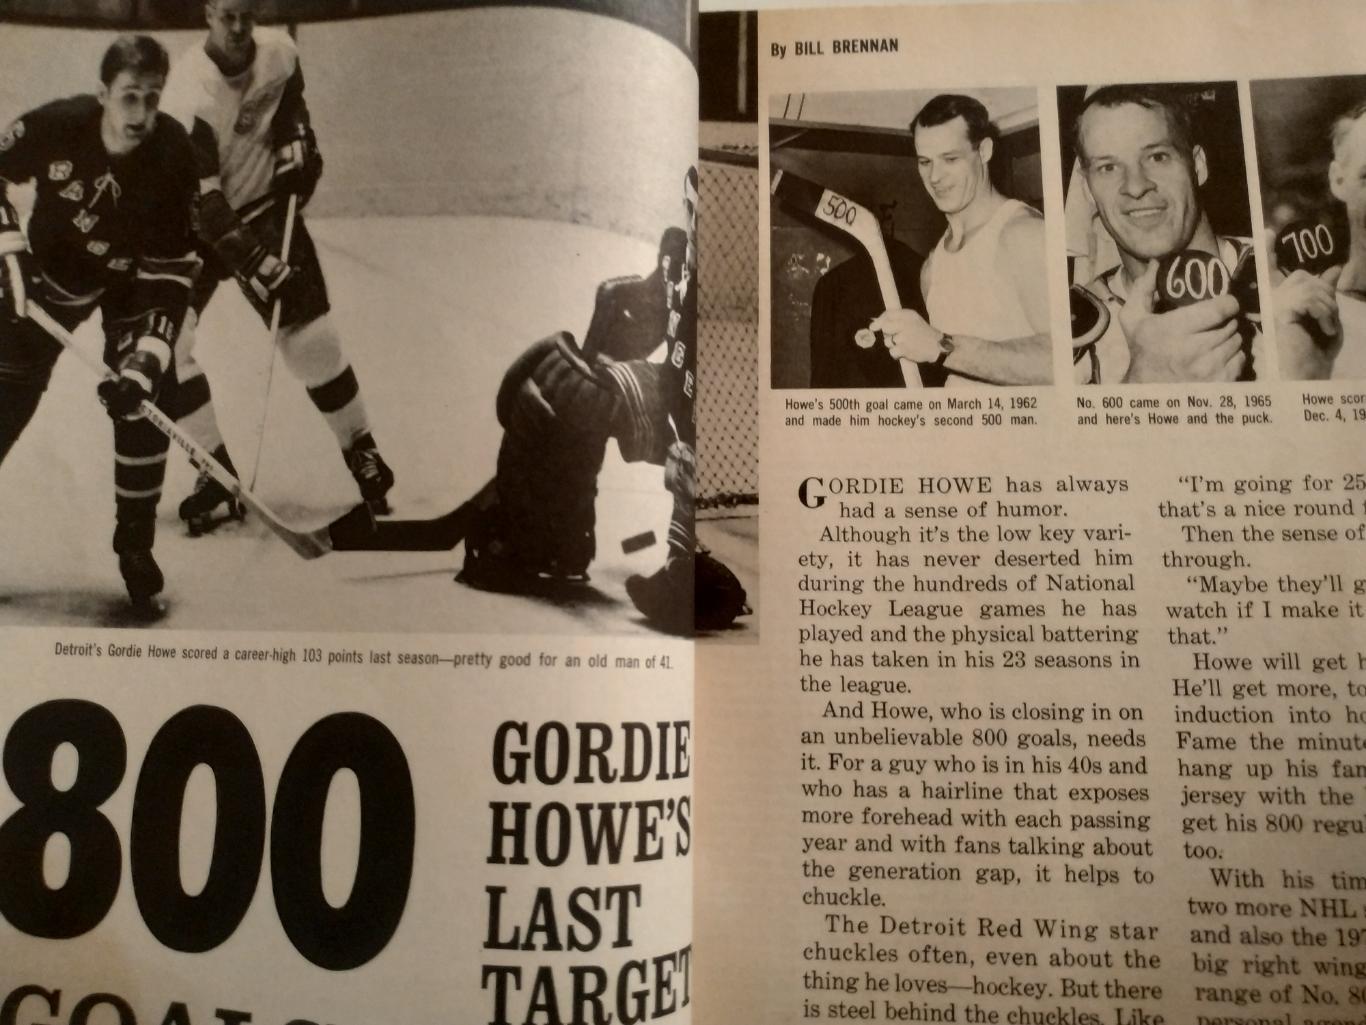 ЖУРНАЛ СПРАВОЧНИК НХЛ СПОРТ ЗВЕЗДЫ ХОКЕЕЙ 1970 NHL SPORT STAR OF HOCKEY 6